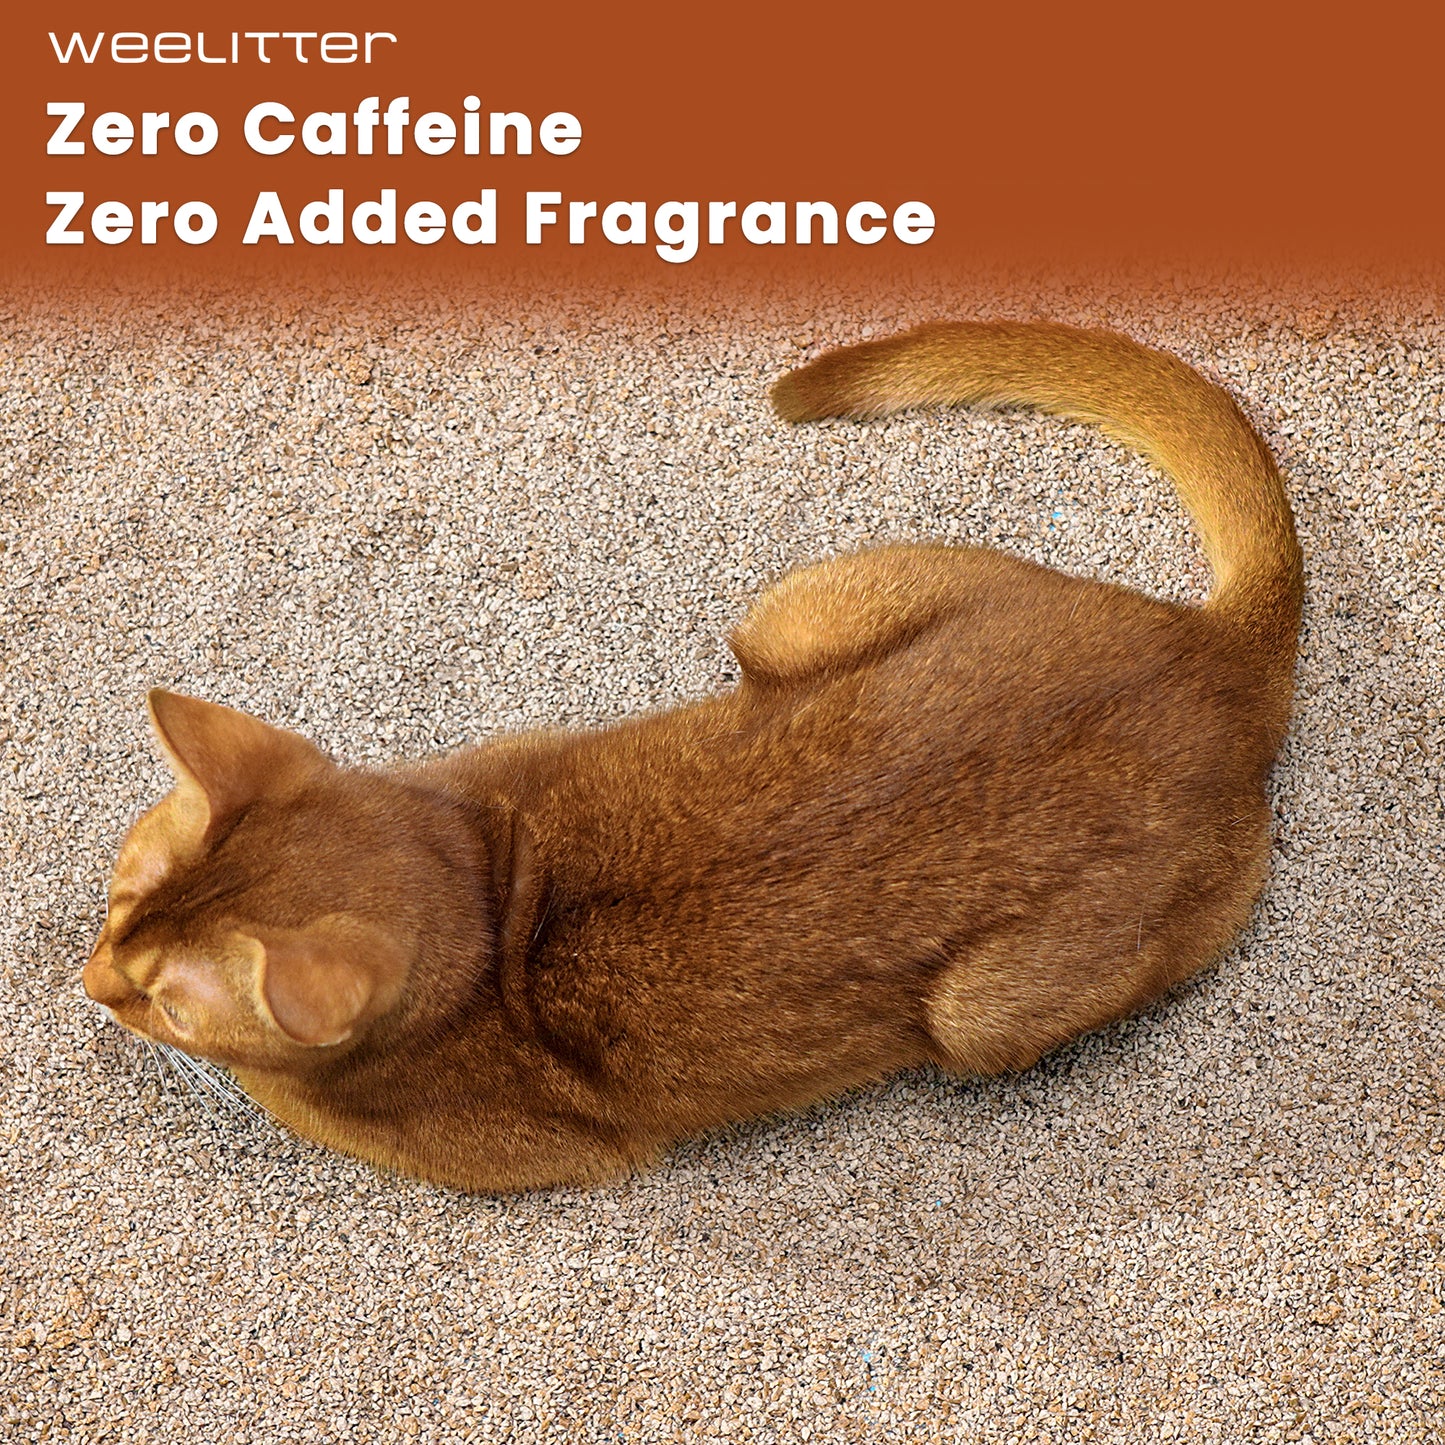 WeeLitter Coffee Cat Litter | Natural Flushable-Housebreaking Extra Clumping Pellet Litter | Dust Free Cat Litter | Ultra Absorbent Water Flushable (14lb)